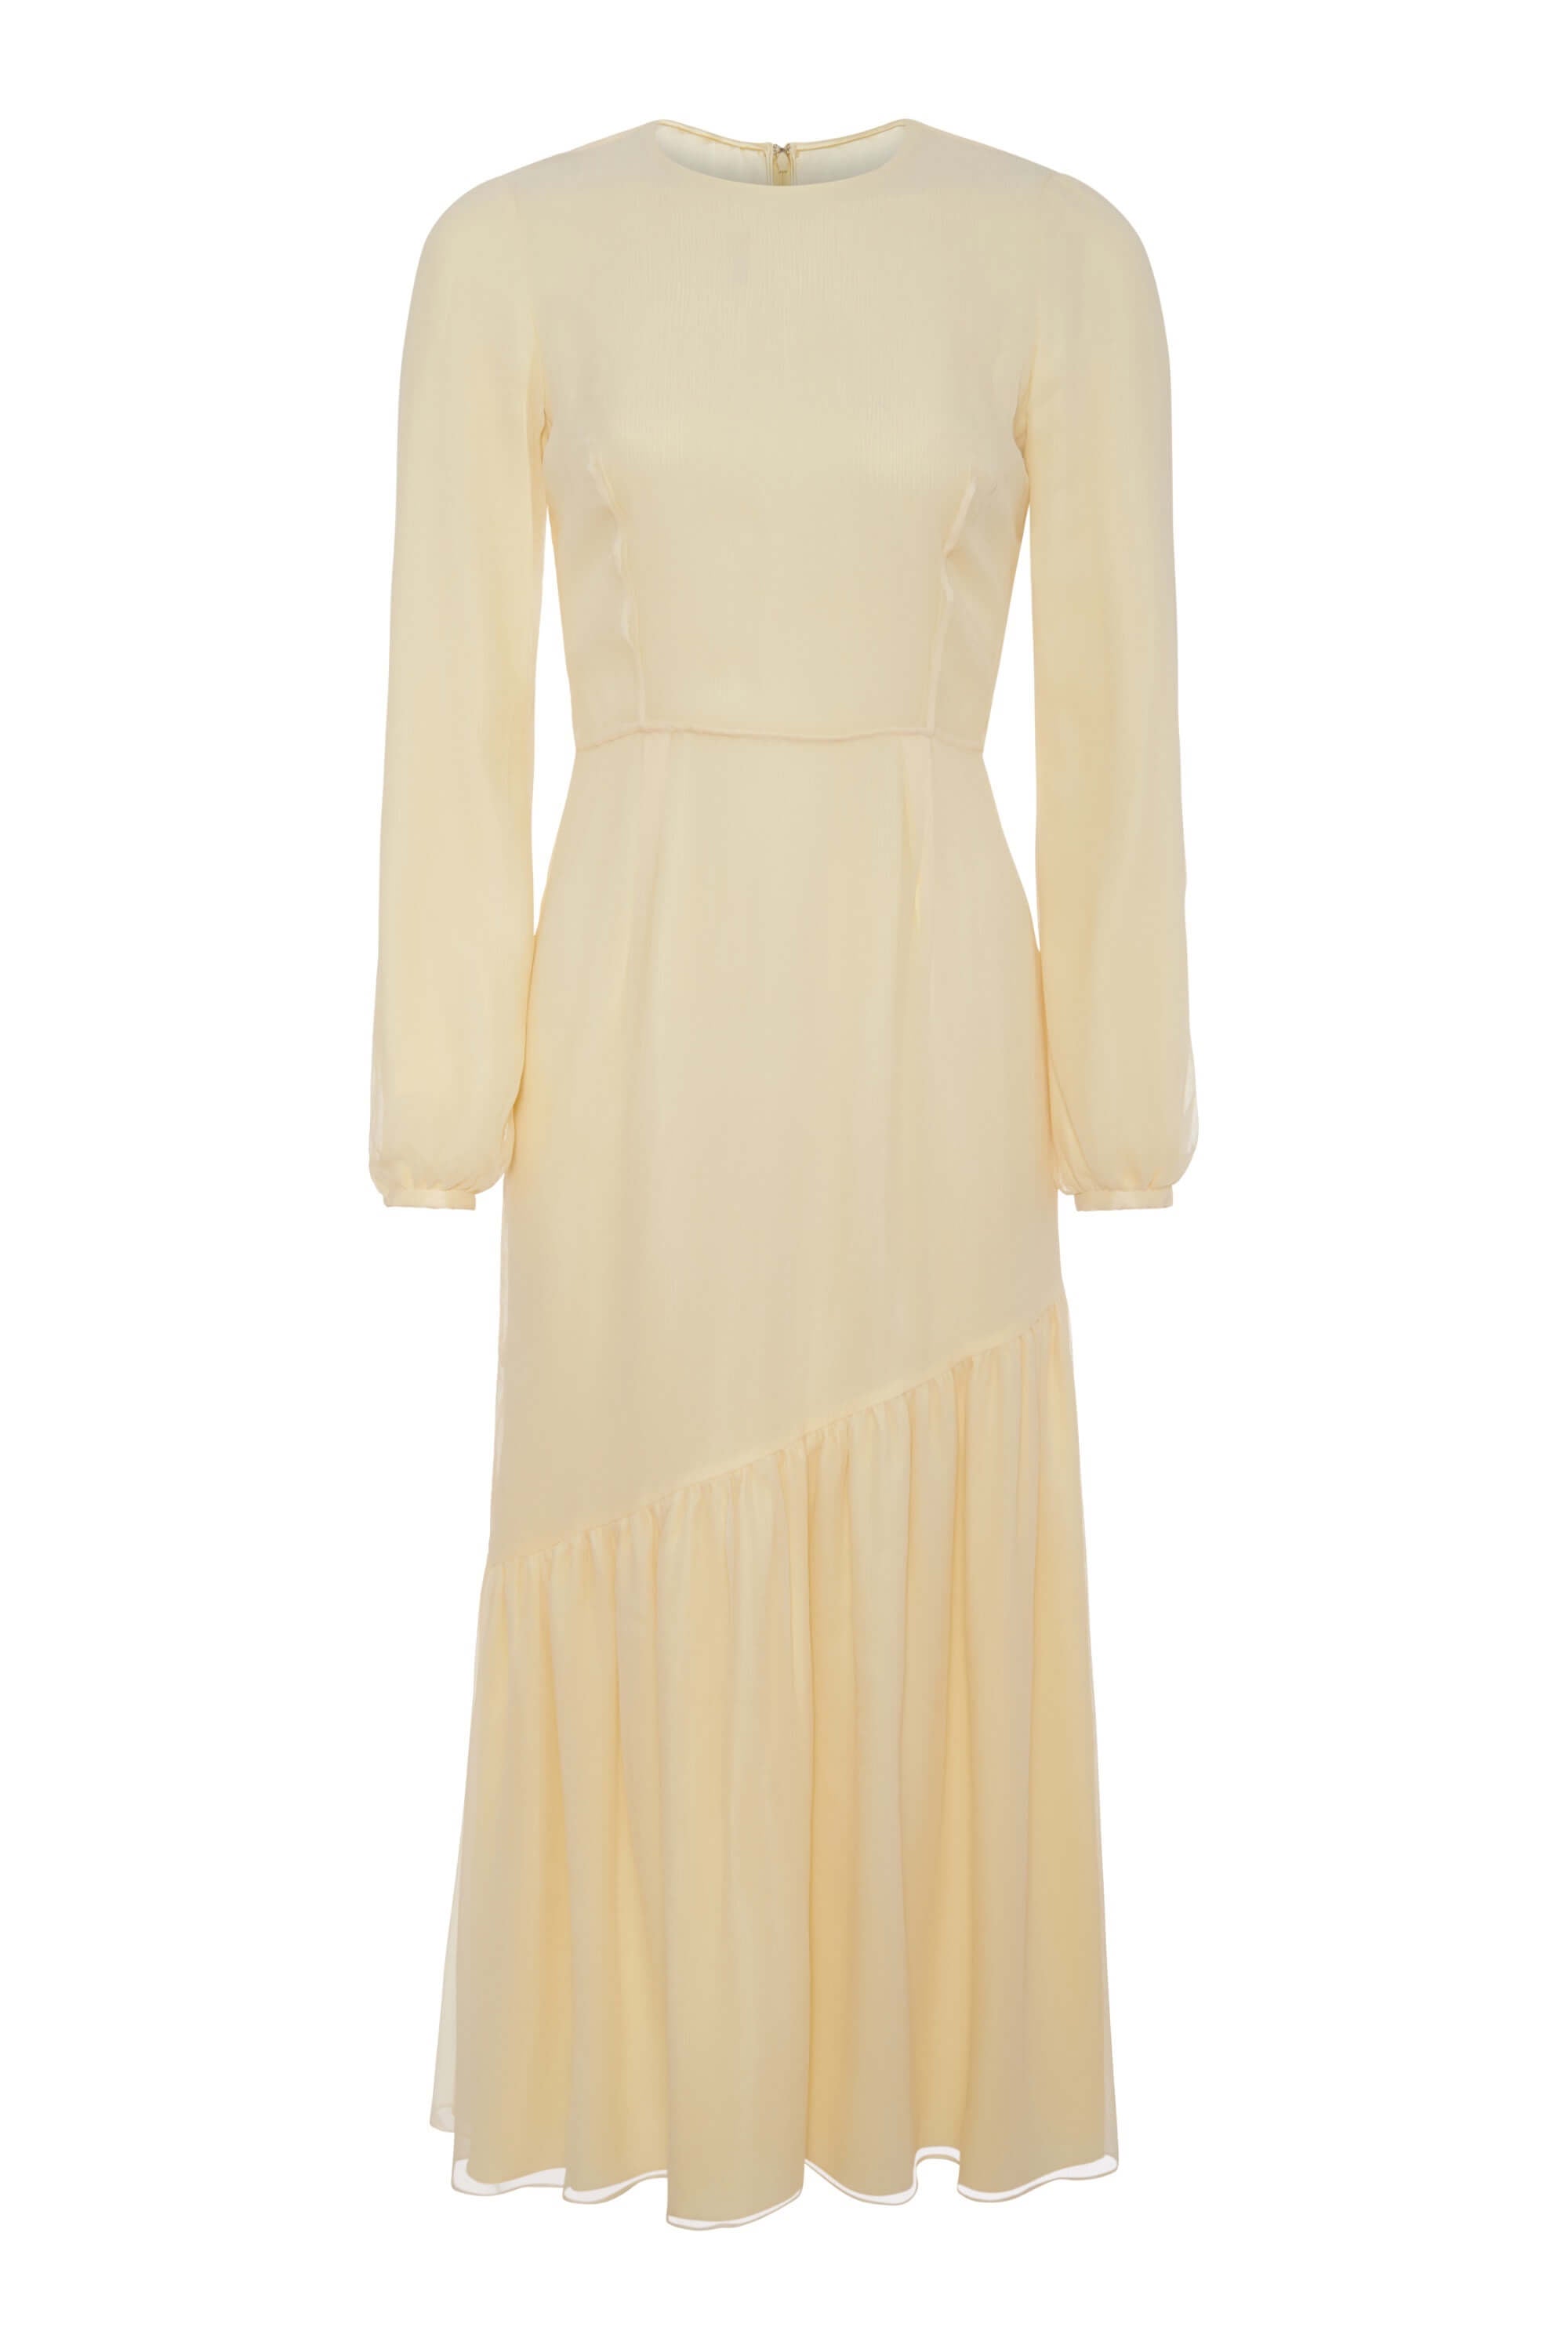 Stevie Yellow Crinkle Chiffon Dress